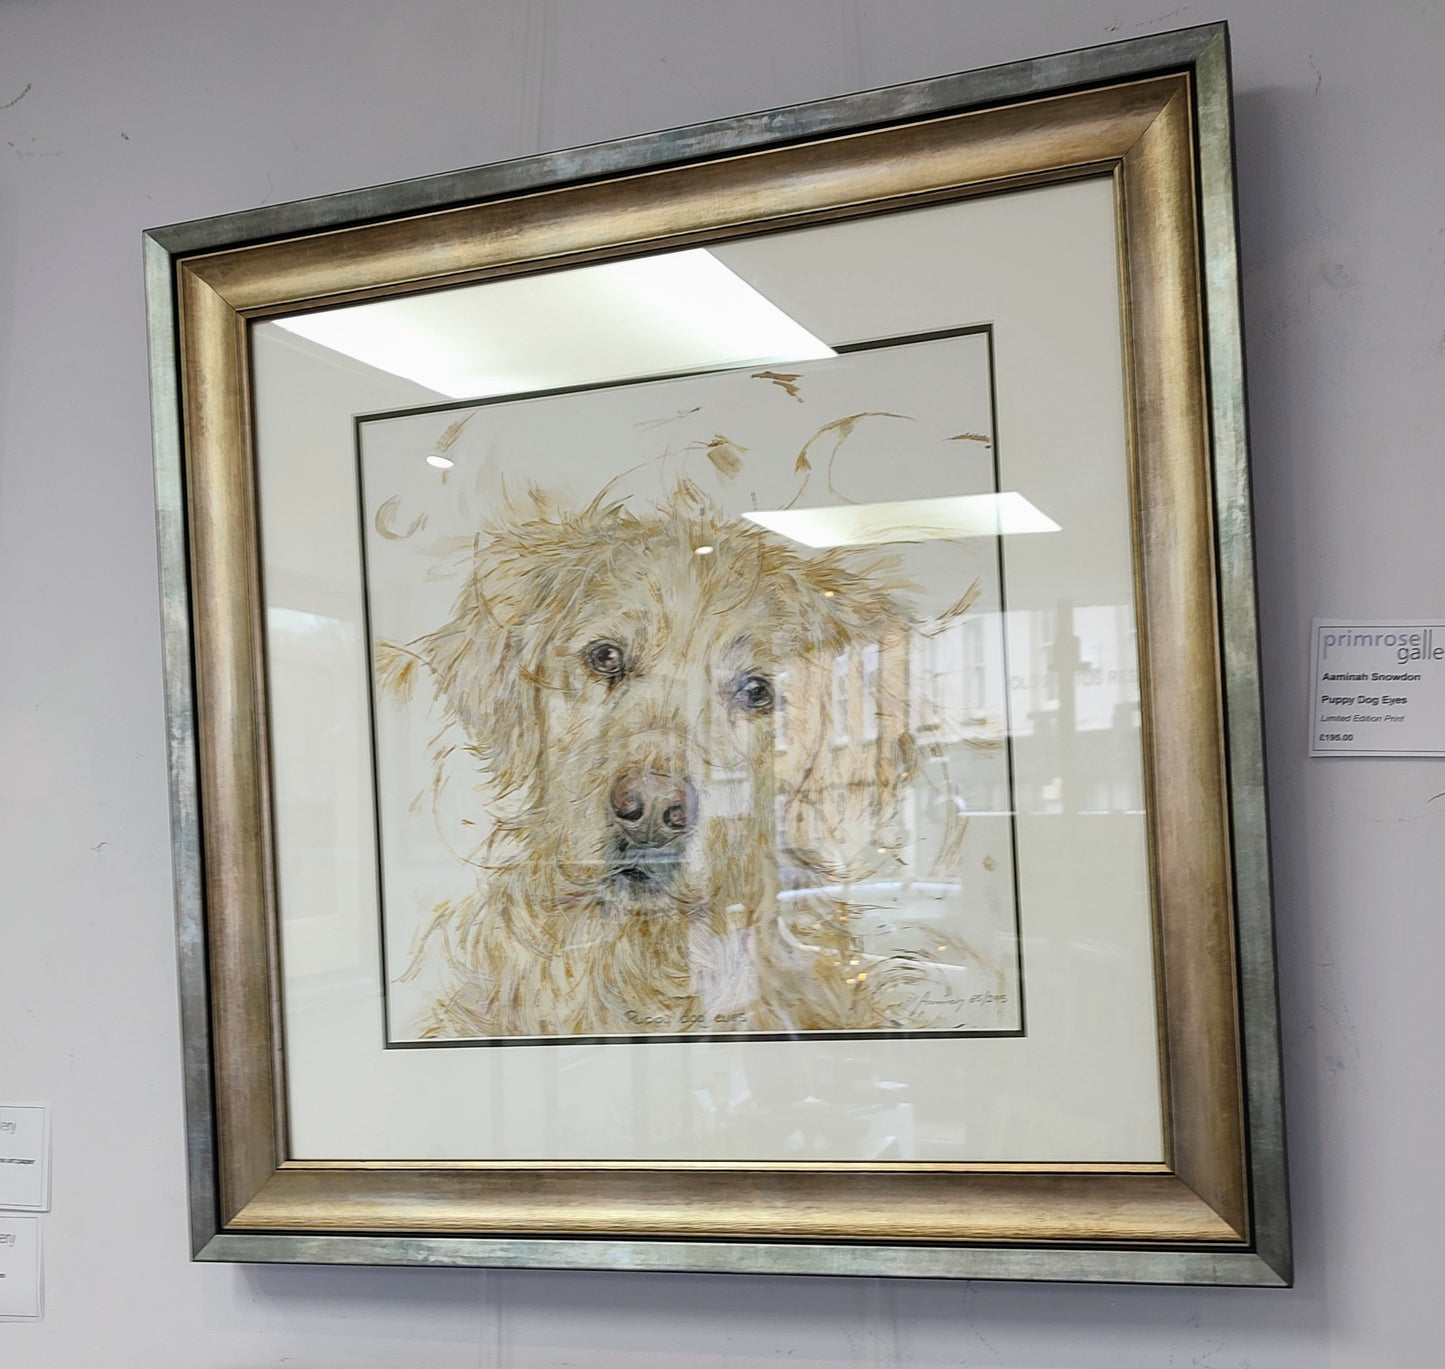 Aaminah Snowdon- Puppy Dog Eyes,  Framed Limited Edition Print of a Golden Labrador Dog